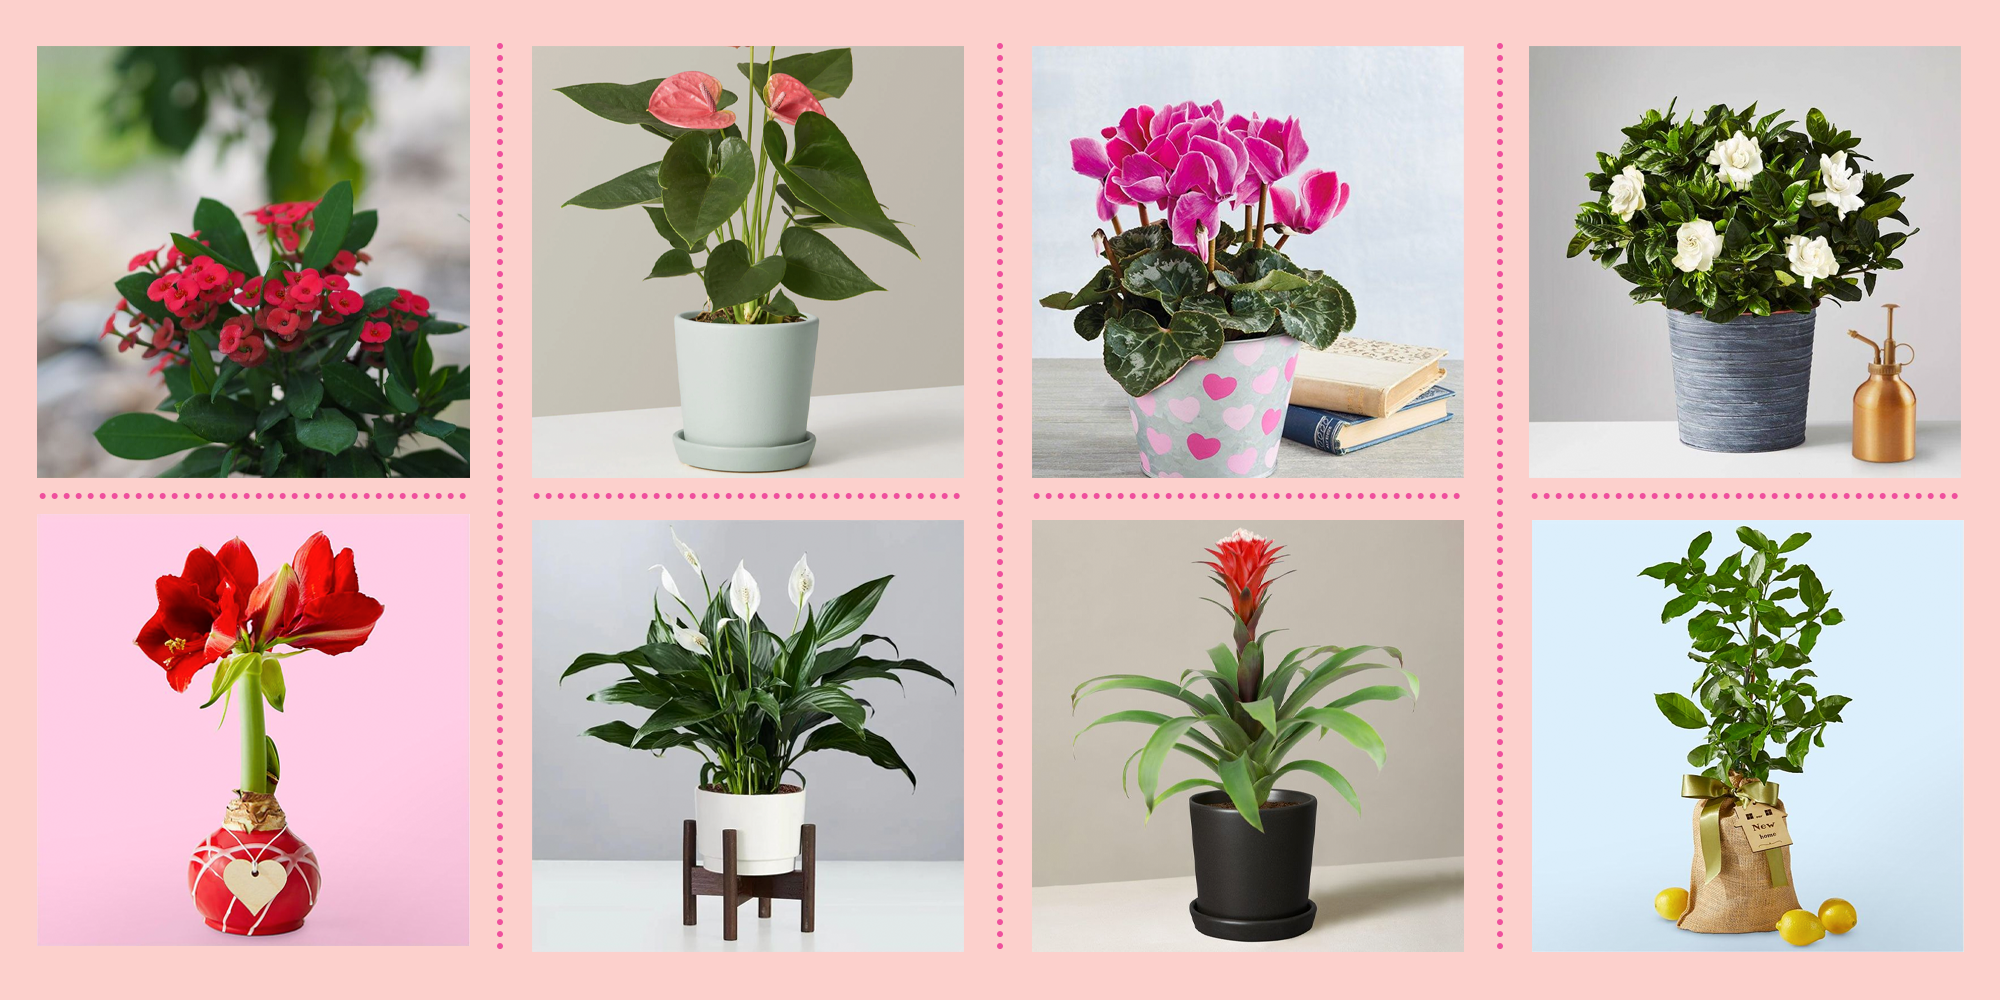 22 Indoor Flowering Plants That Will Make Your Home Feel Happier